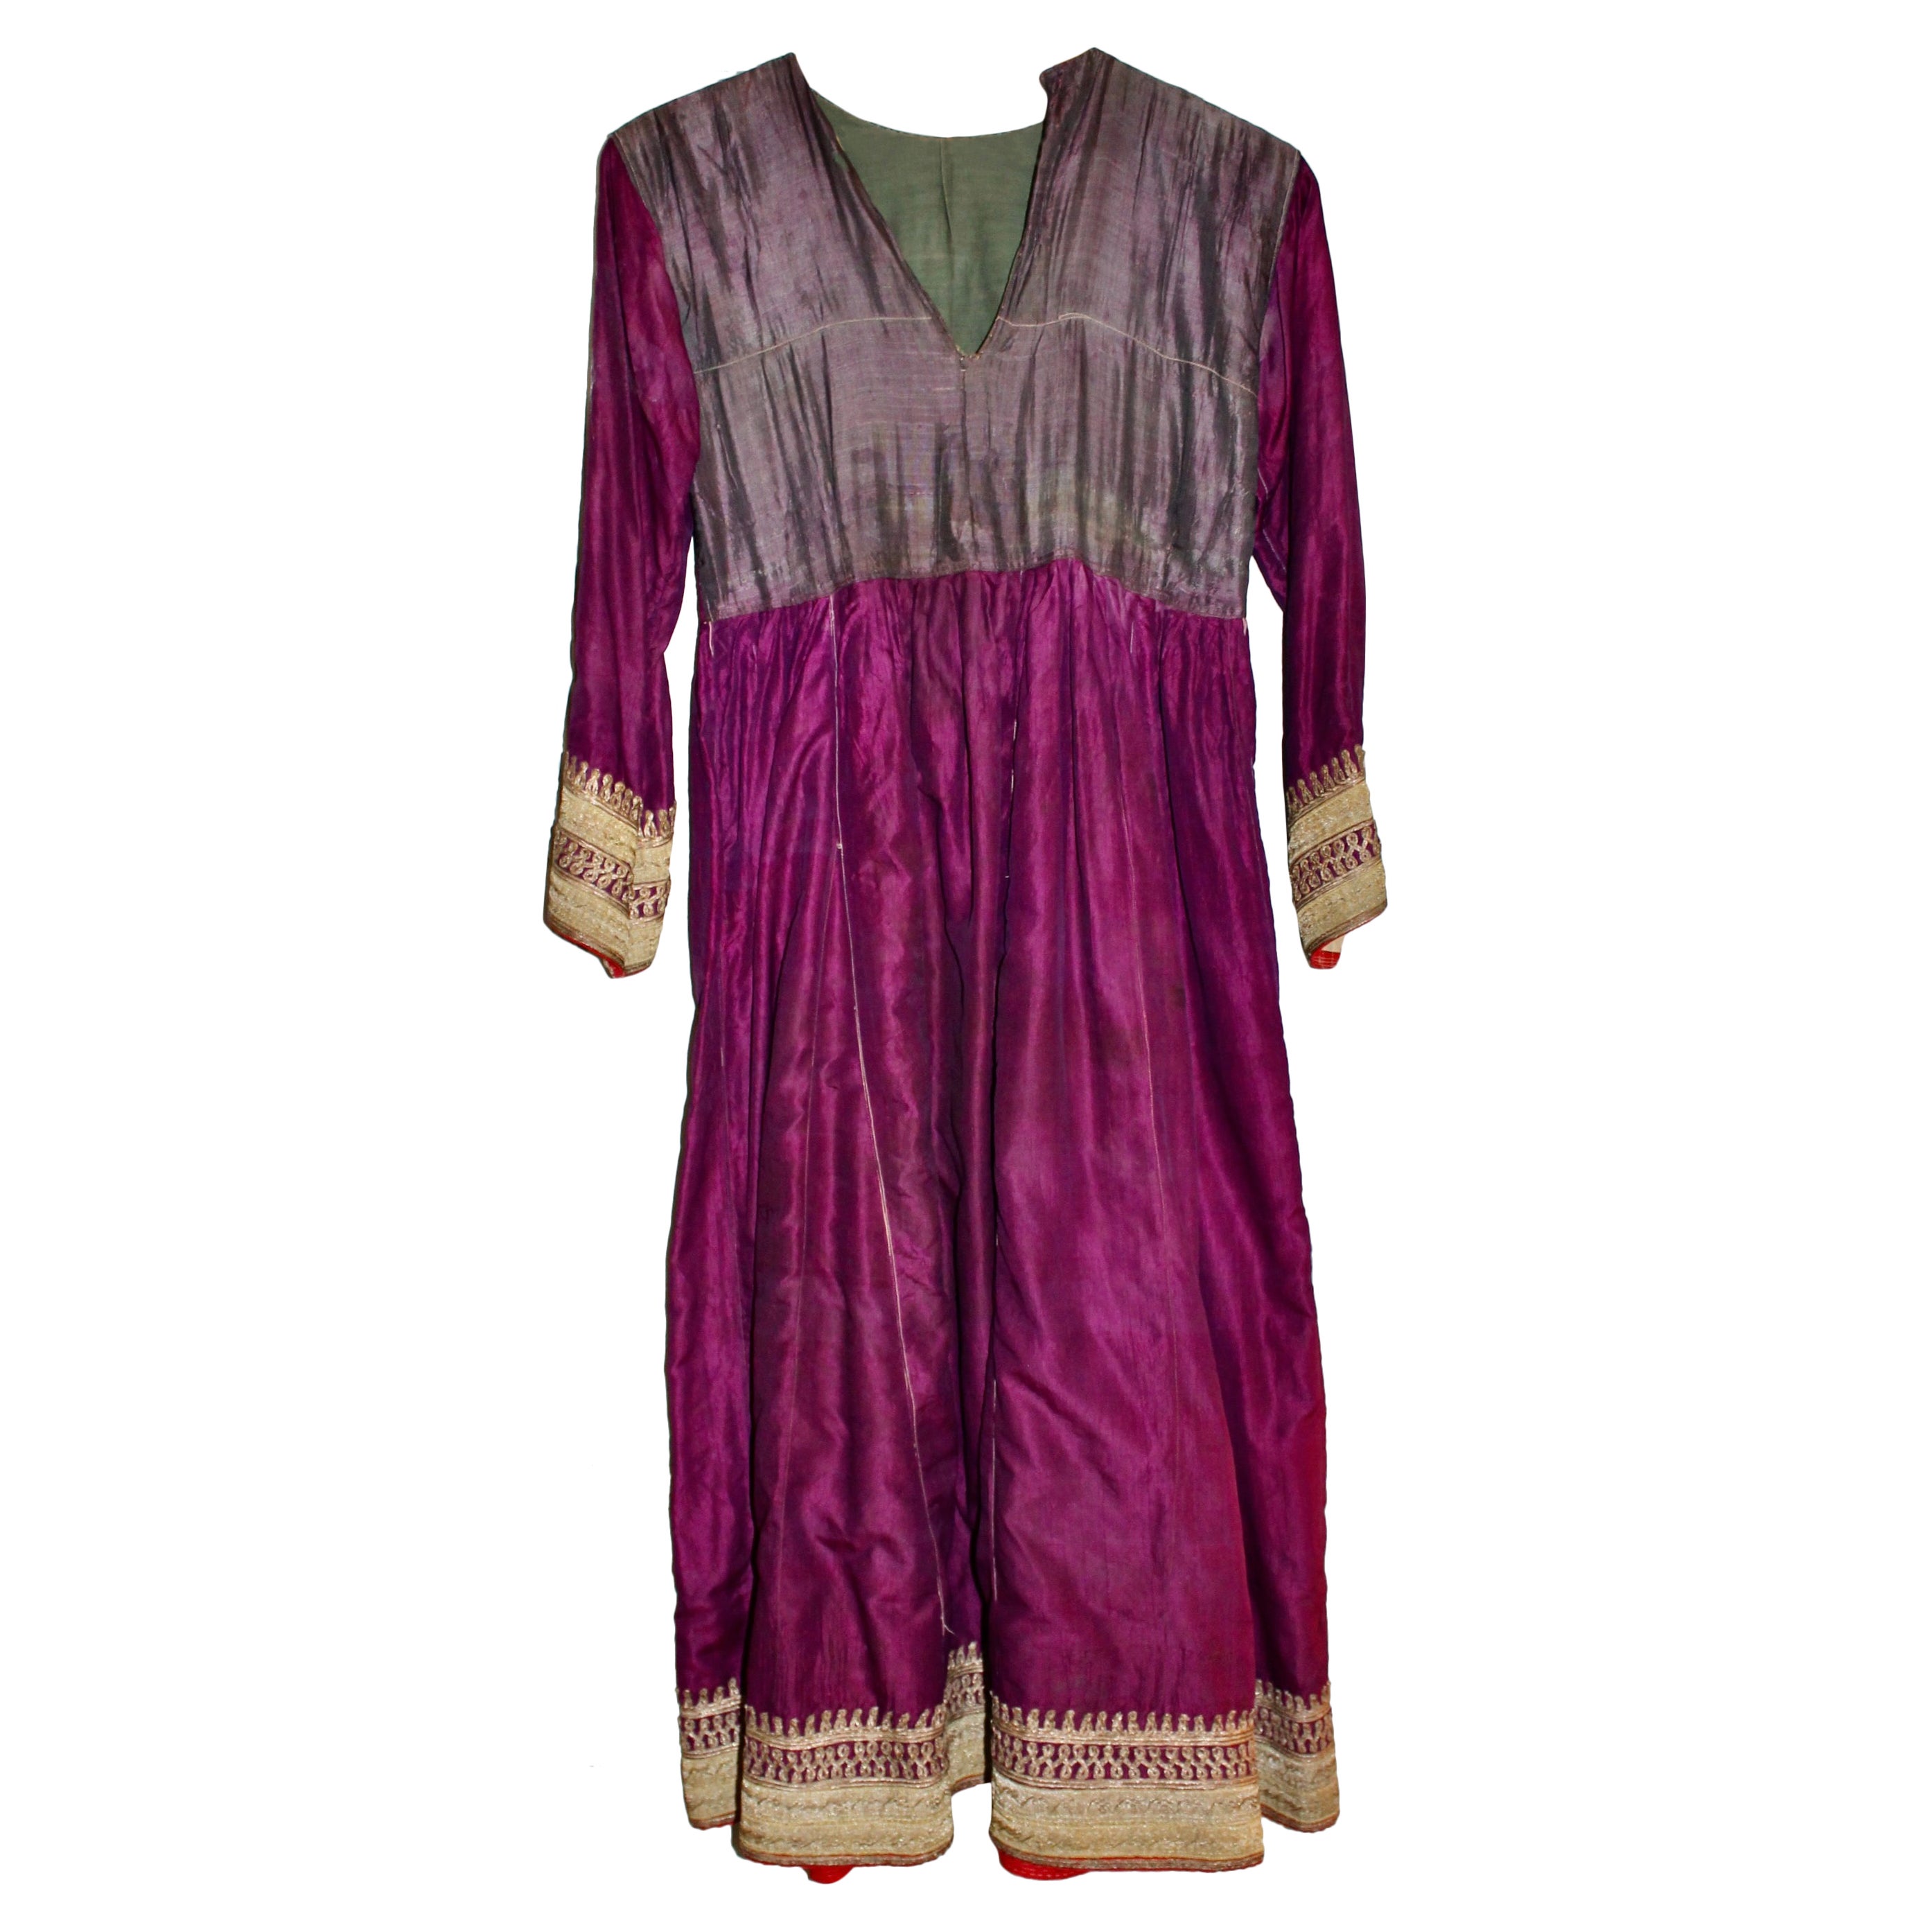 19c. Robe indienne en soie violette tribale